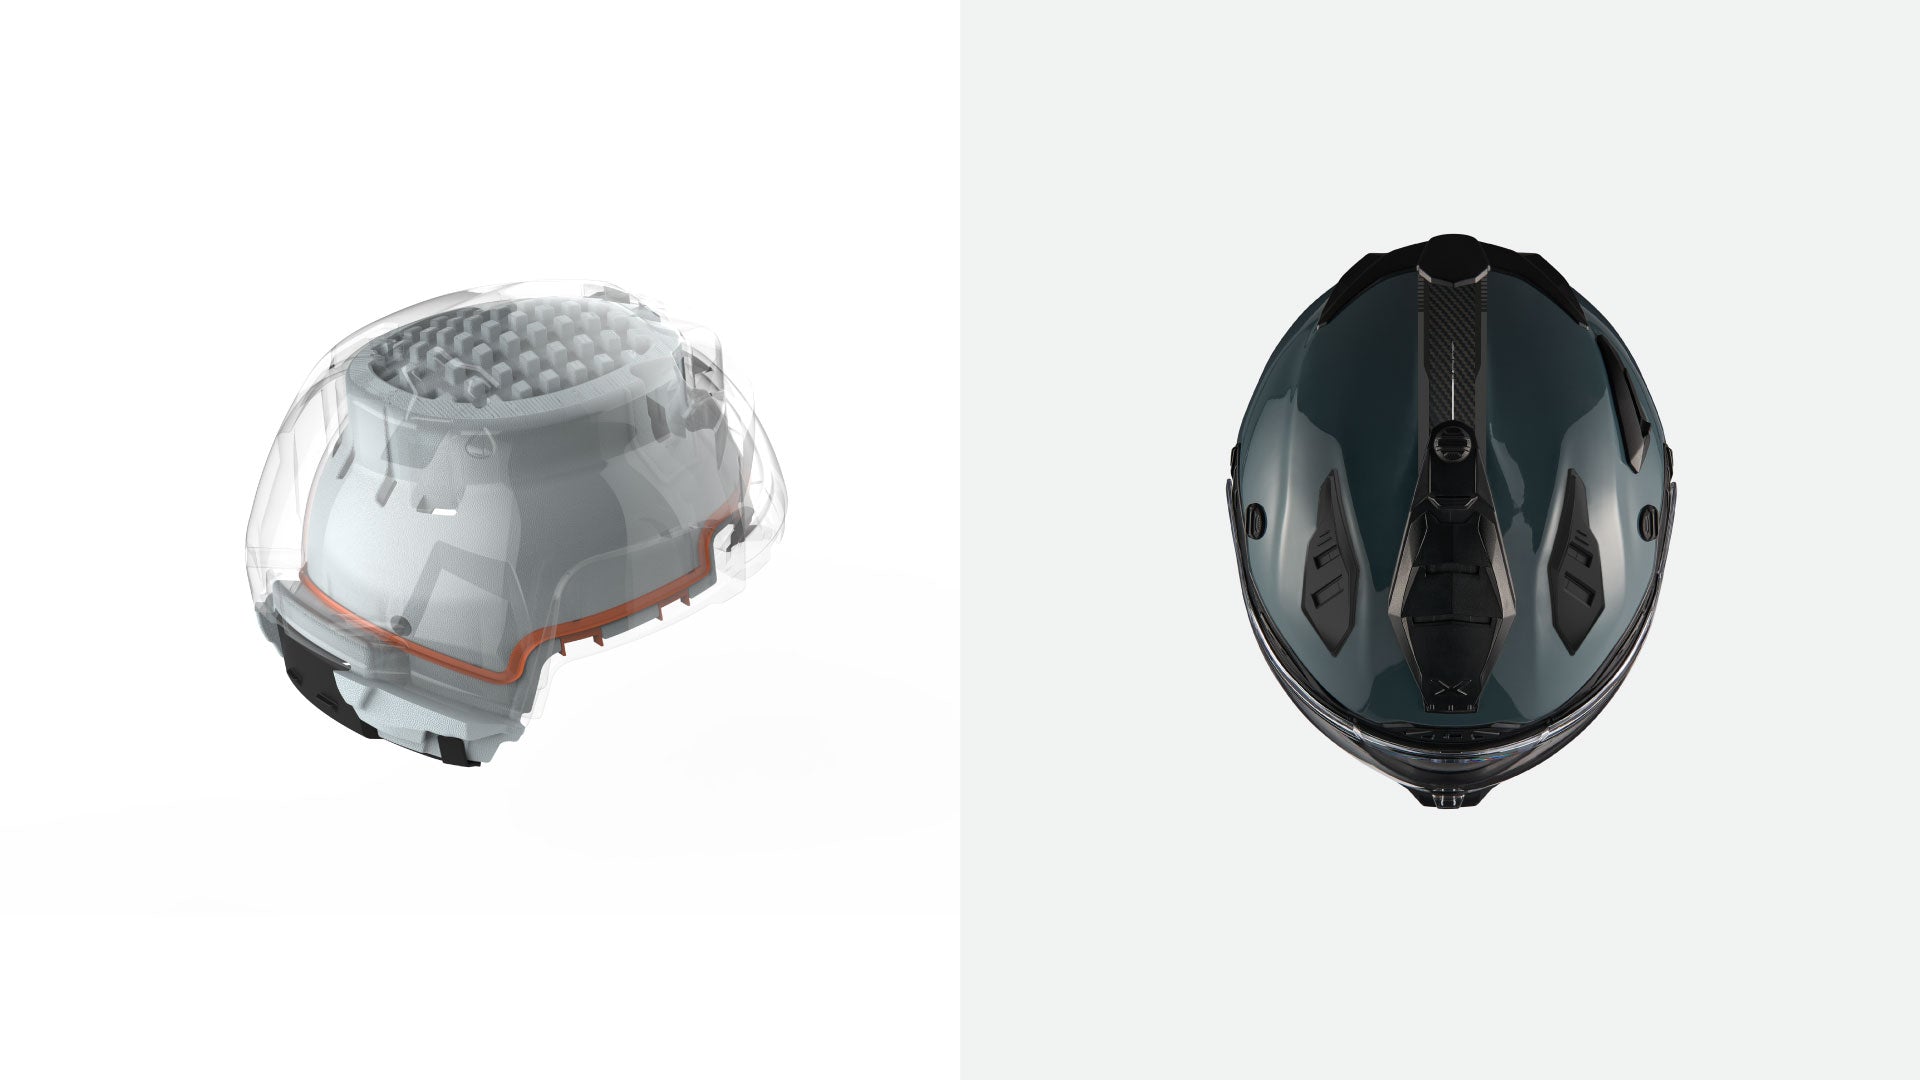 NEXX X.WED3 Trailmania Helmet (4 Colors)